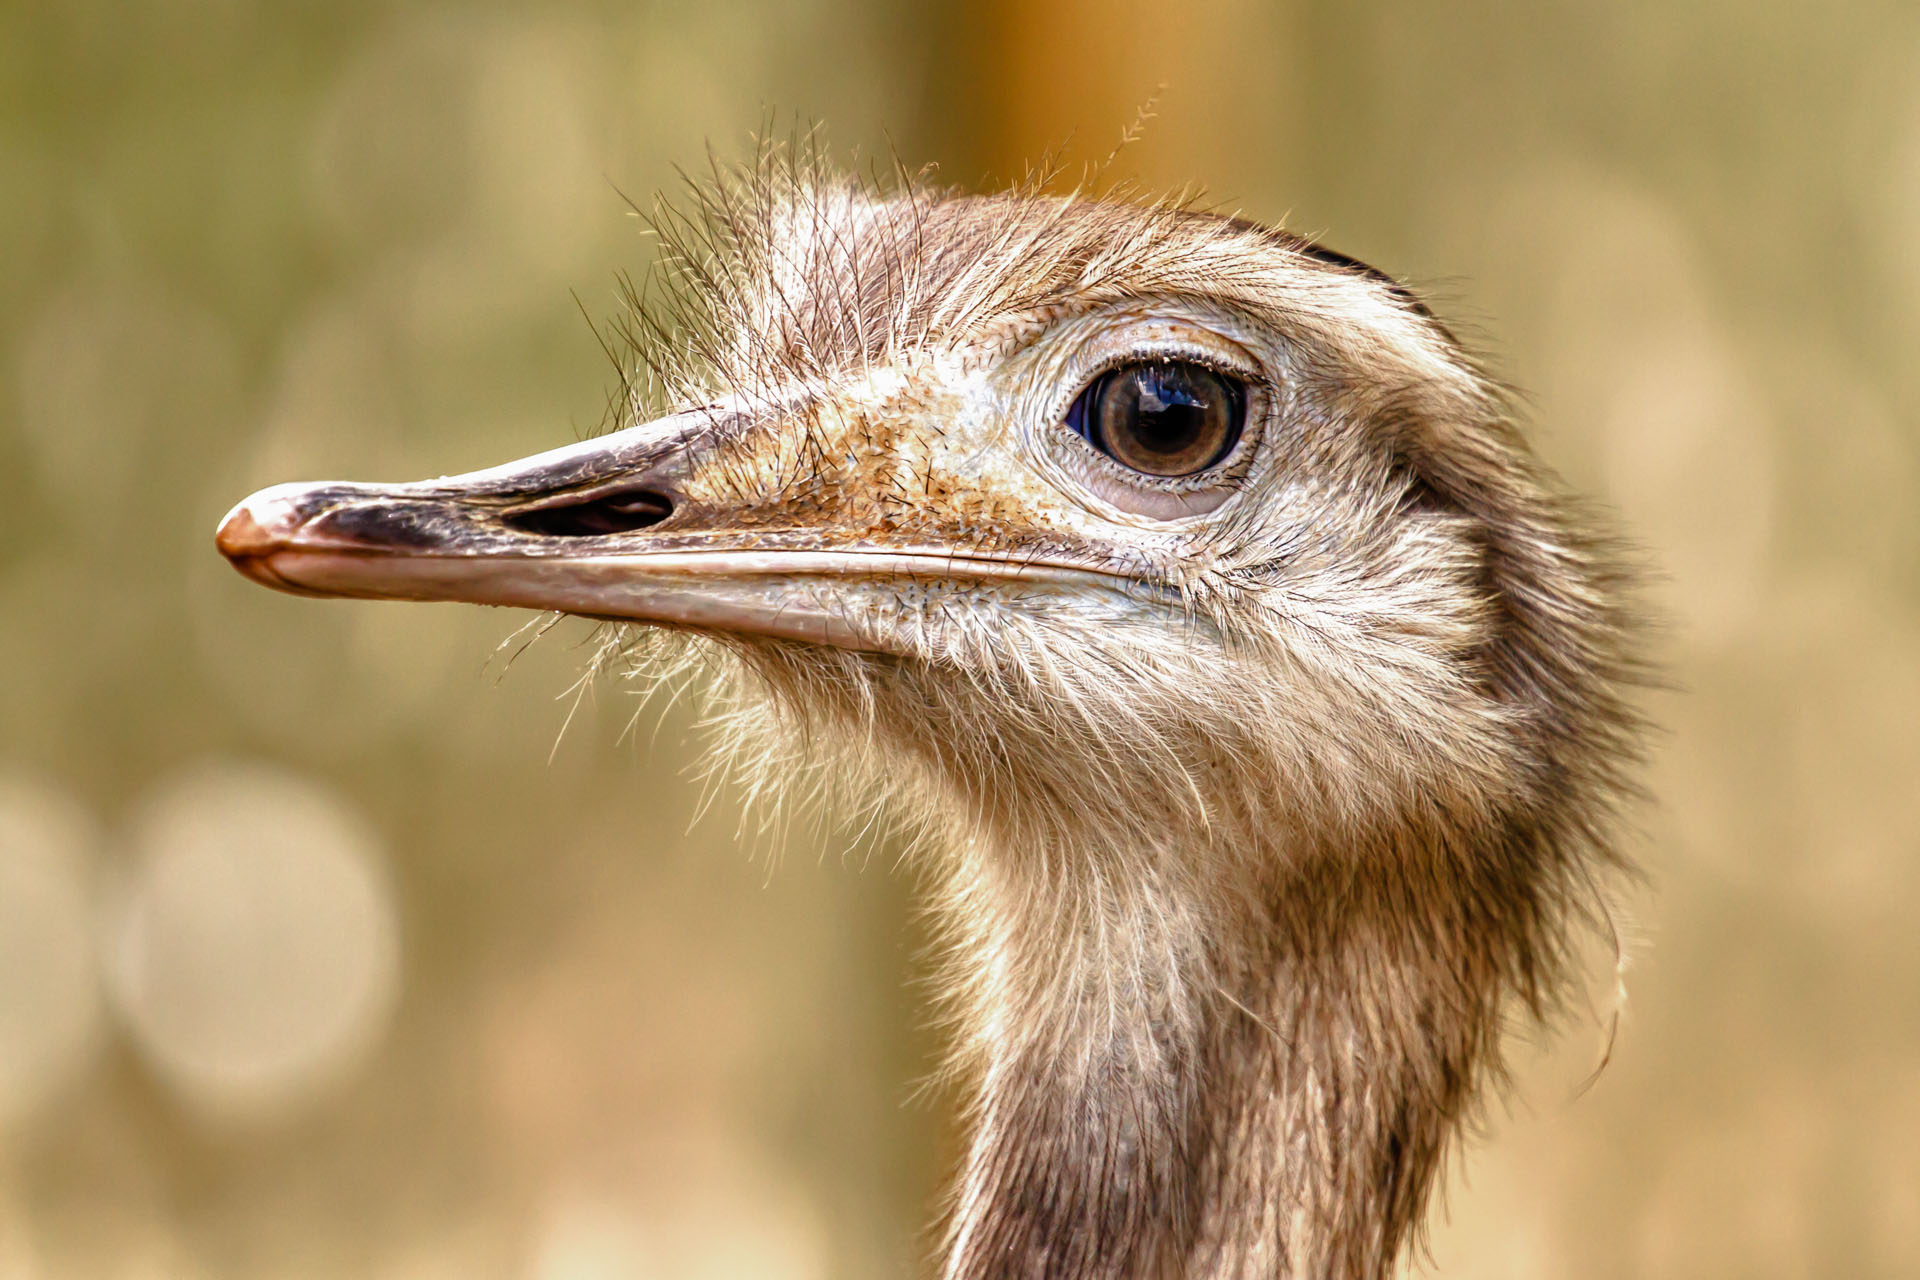 Greater rhea close up - Rhea (bird) - Wikipedia | BIRDS FLIGHTLESS ...